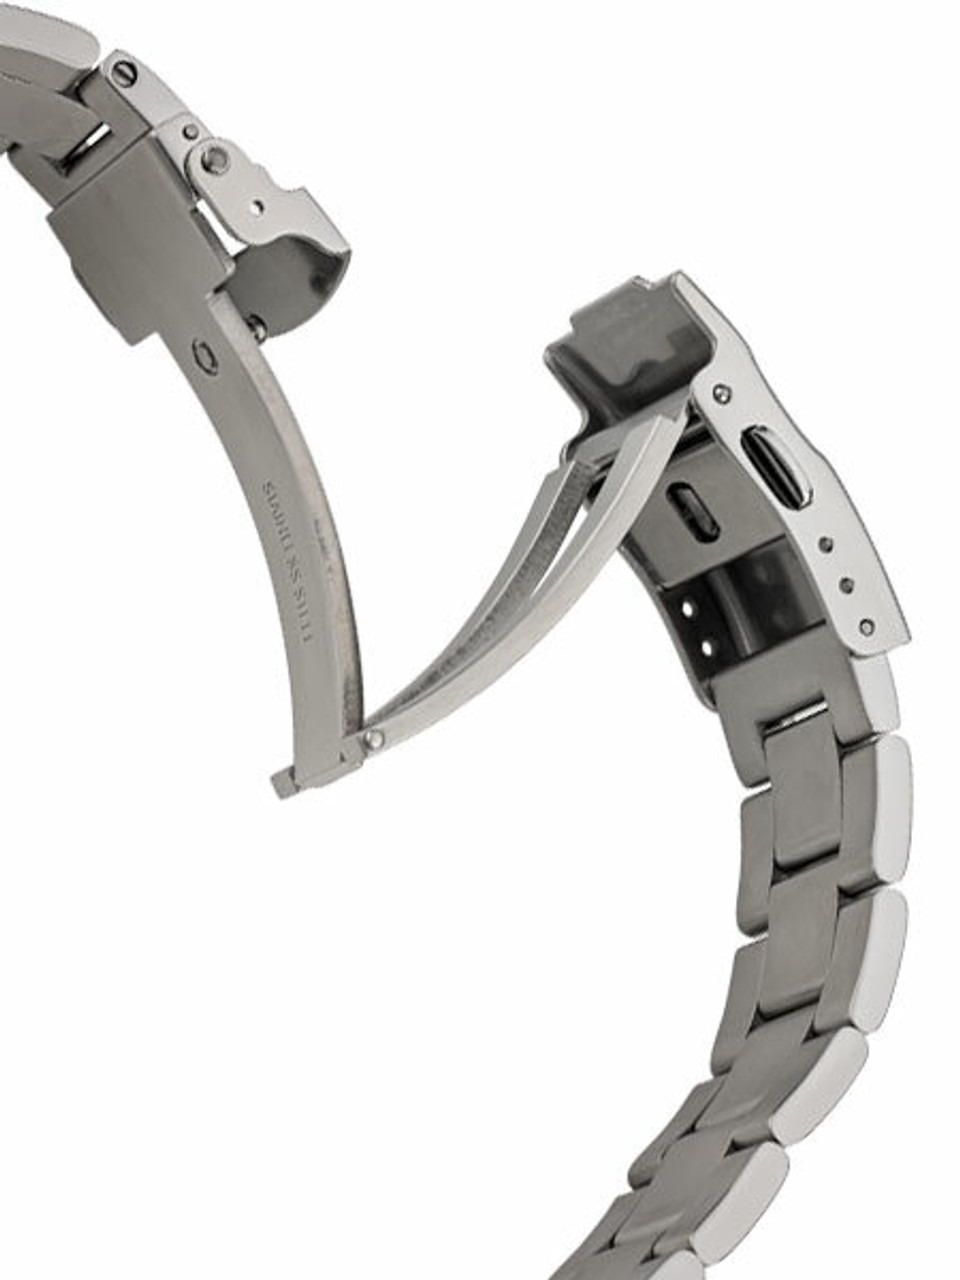 Bracelet with female endlinks for Kamasu